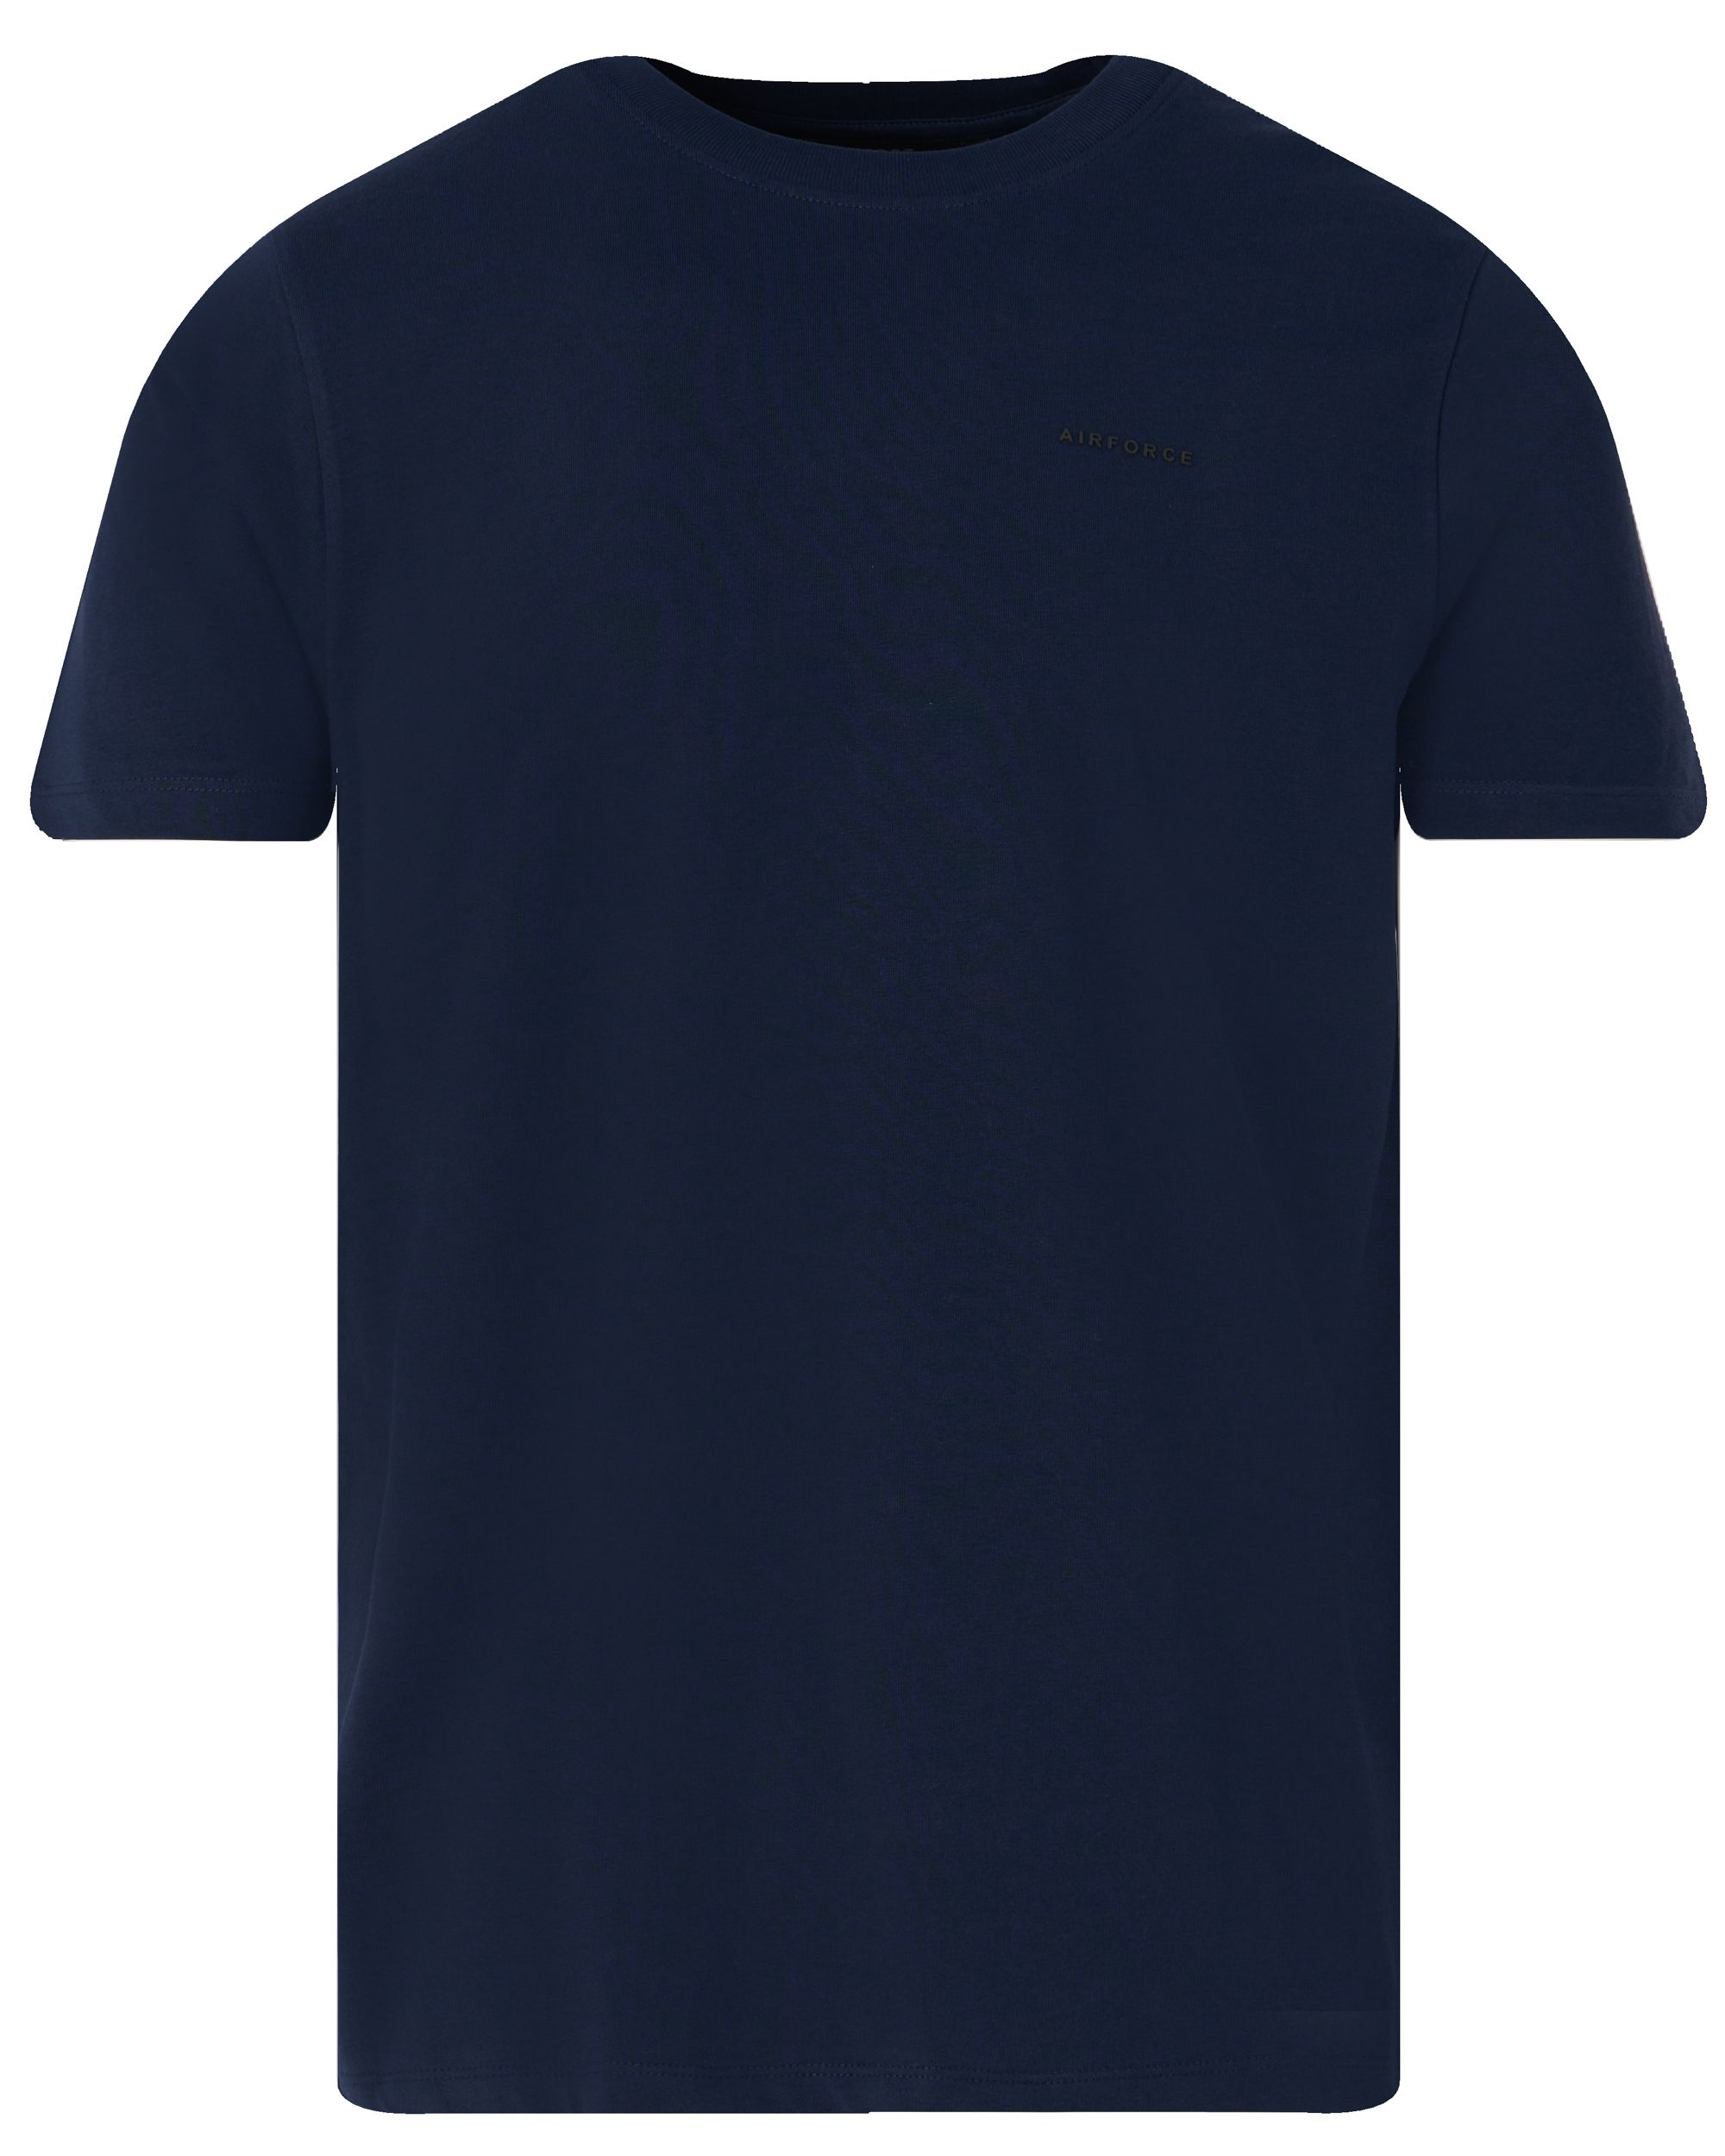 Airforce T-shirt KM Donker blauw 092914-001-L